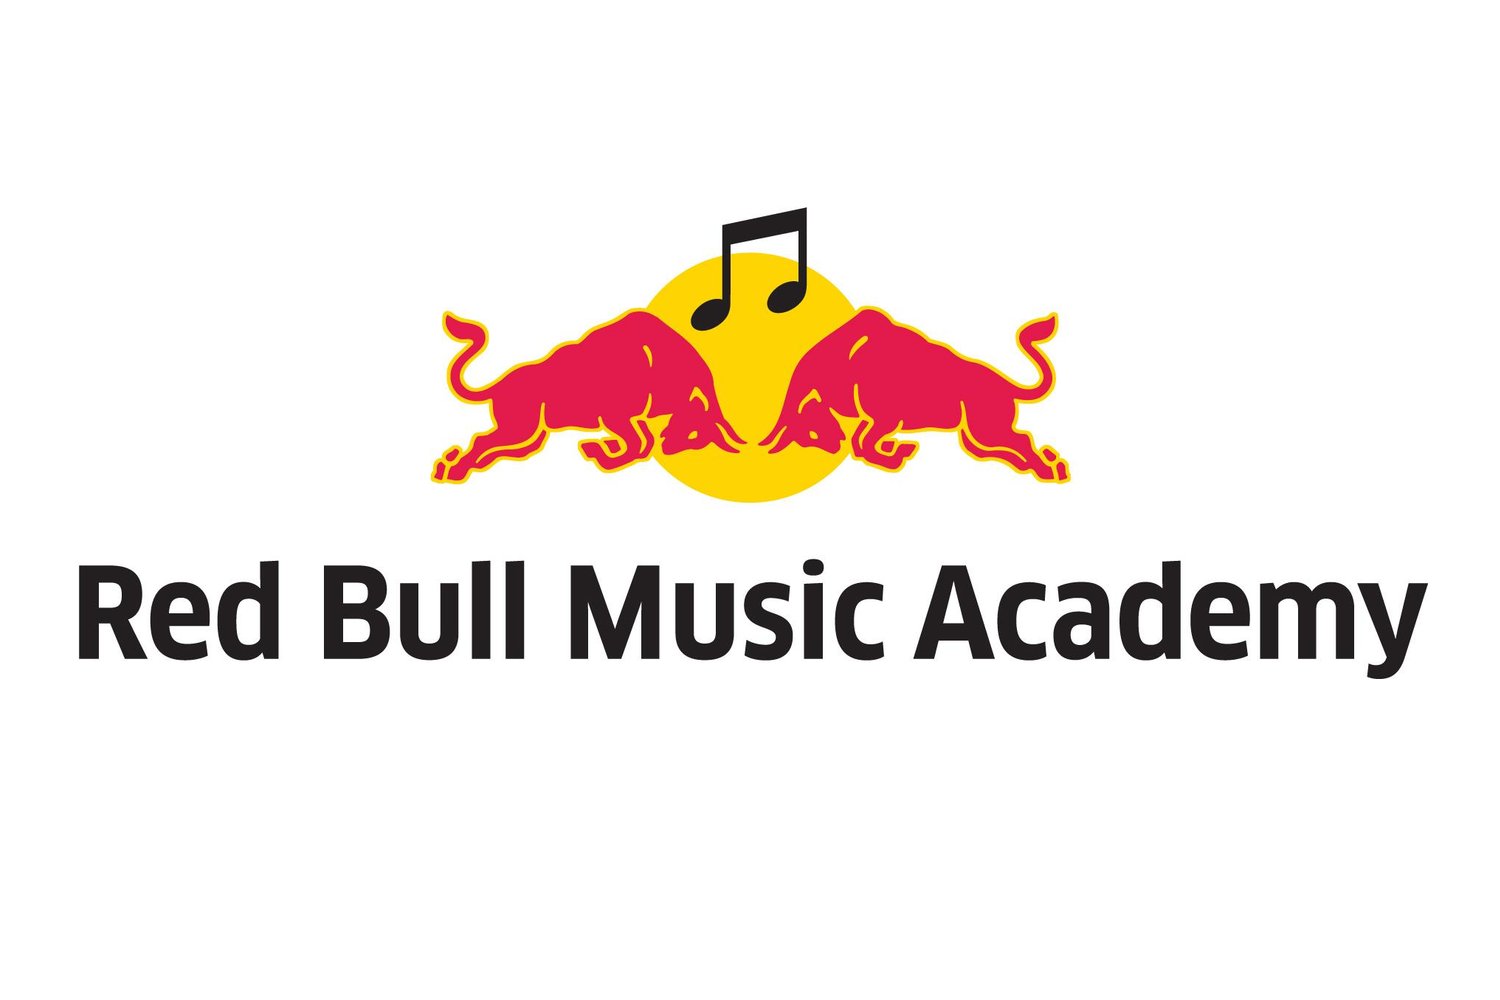 Red Bull Music Academy Logo Image Download Logo Logowiki Net